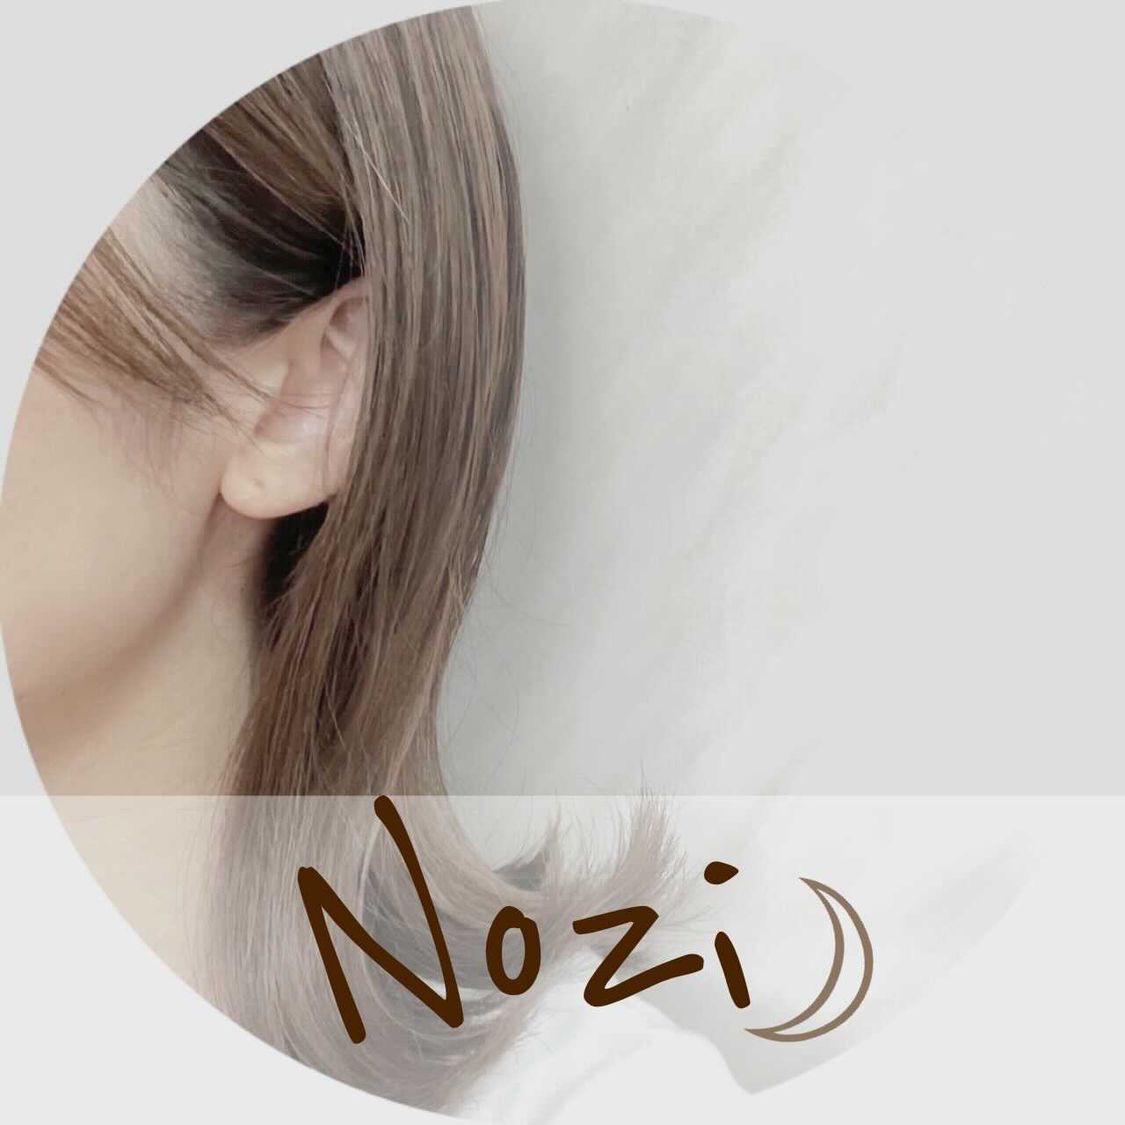 nozi's images